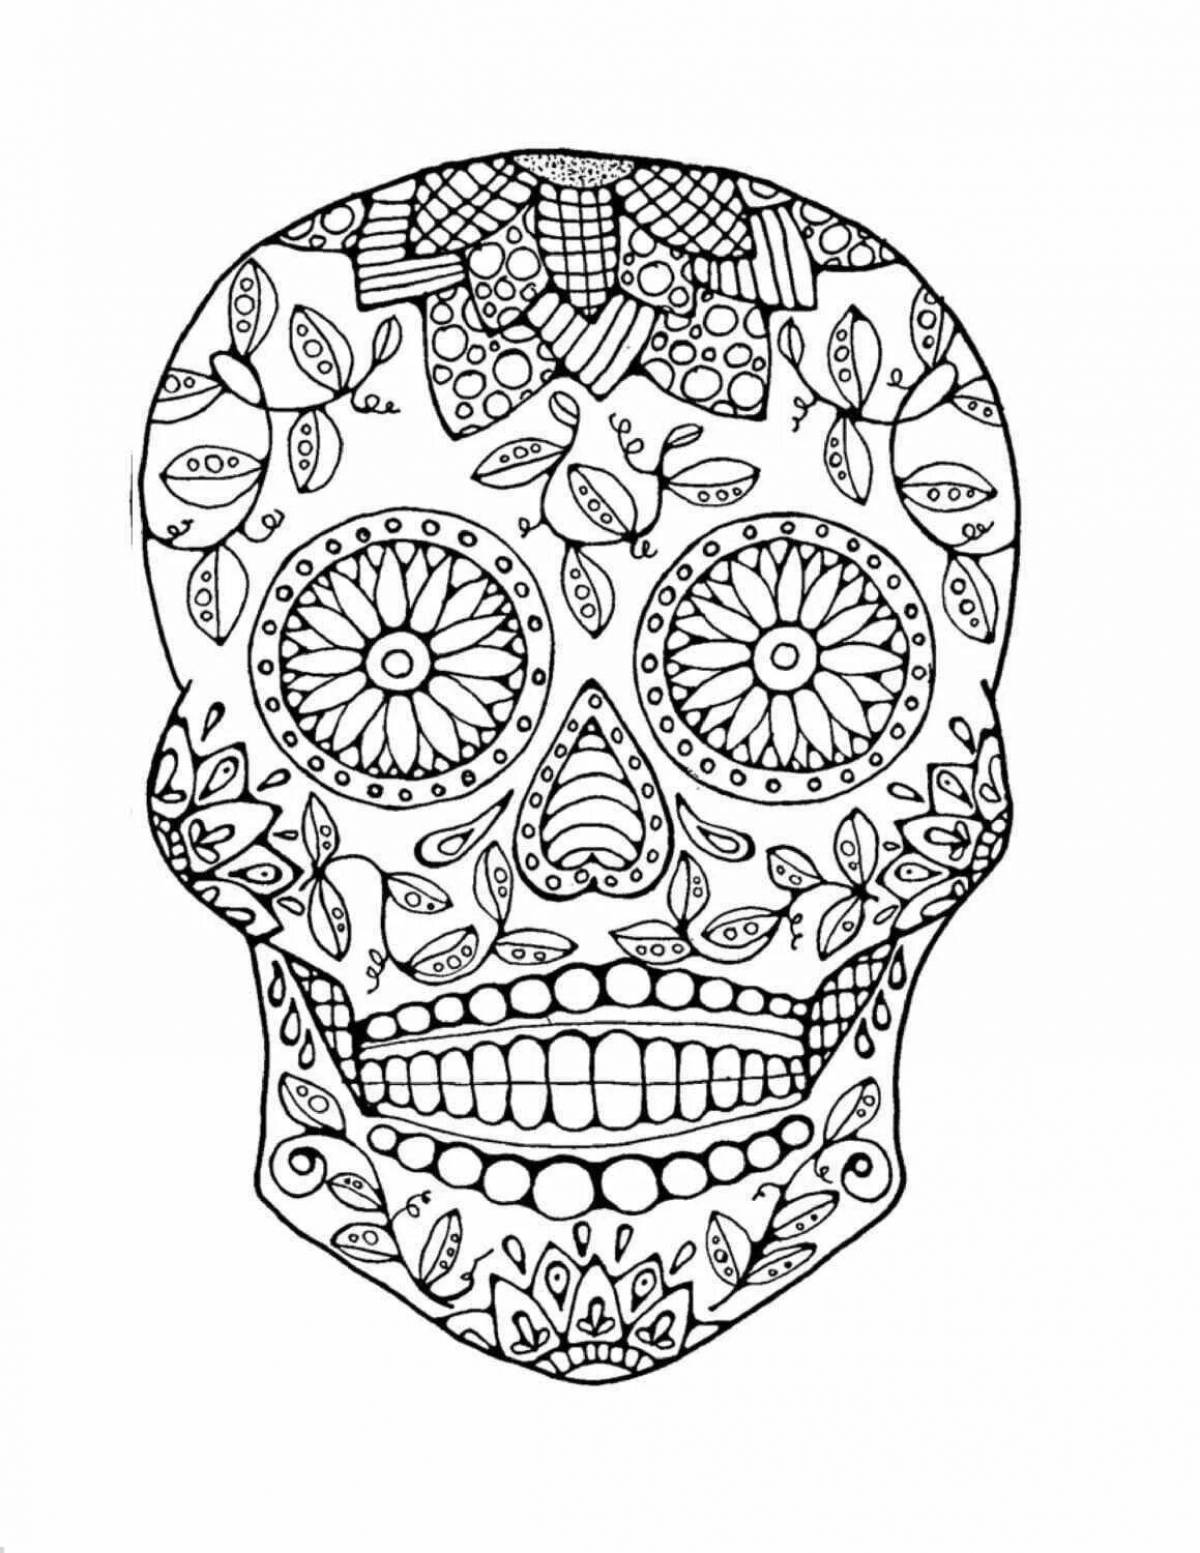 Great anti-stress skull coloring